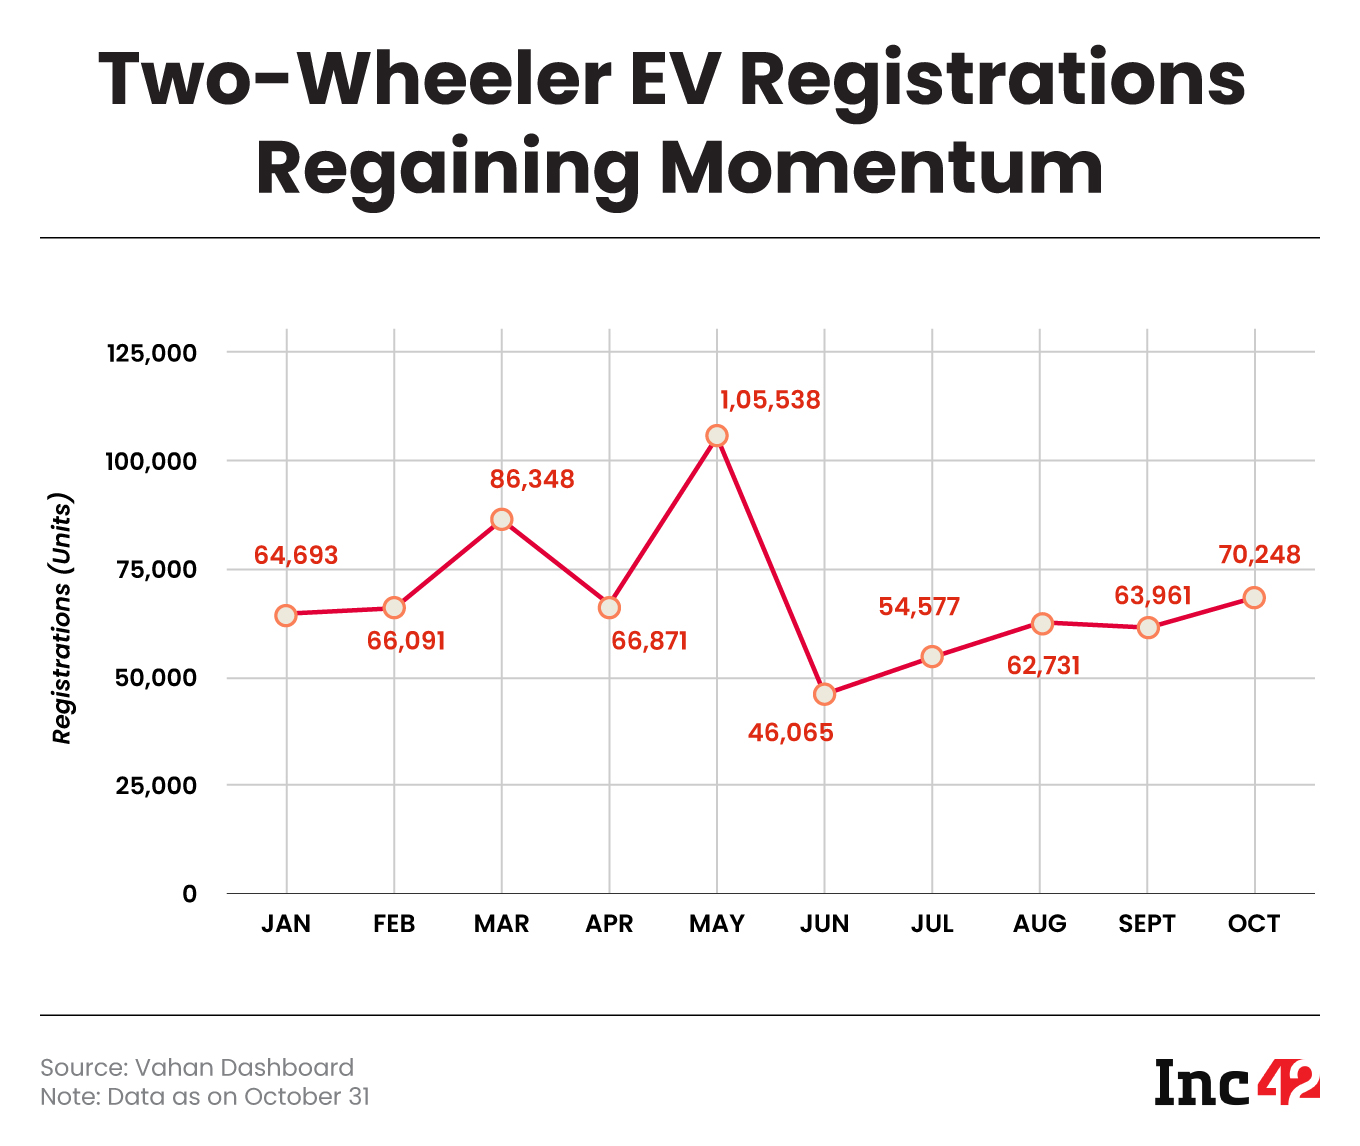 Two-Wheeler EV Registrations Regaining Momentum